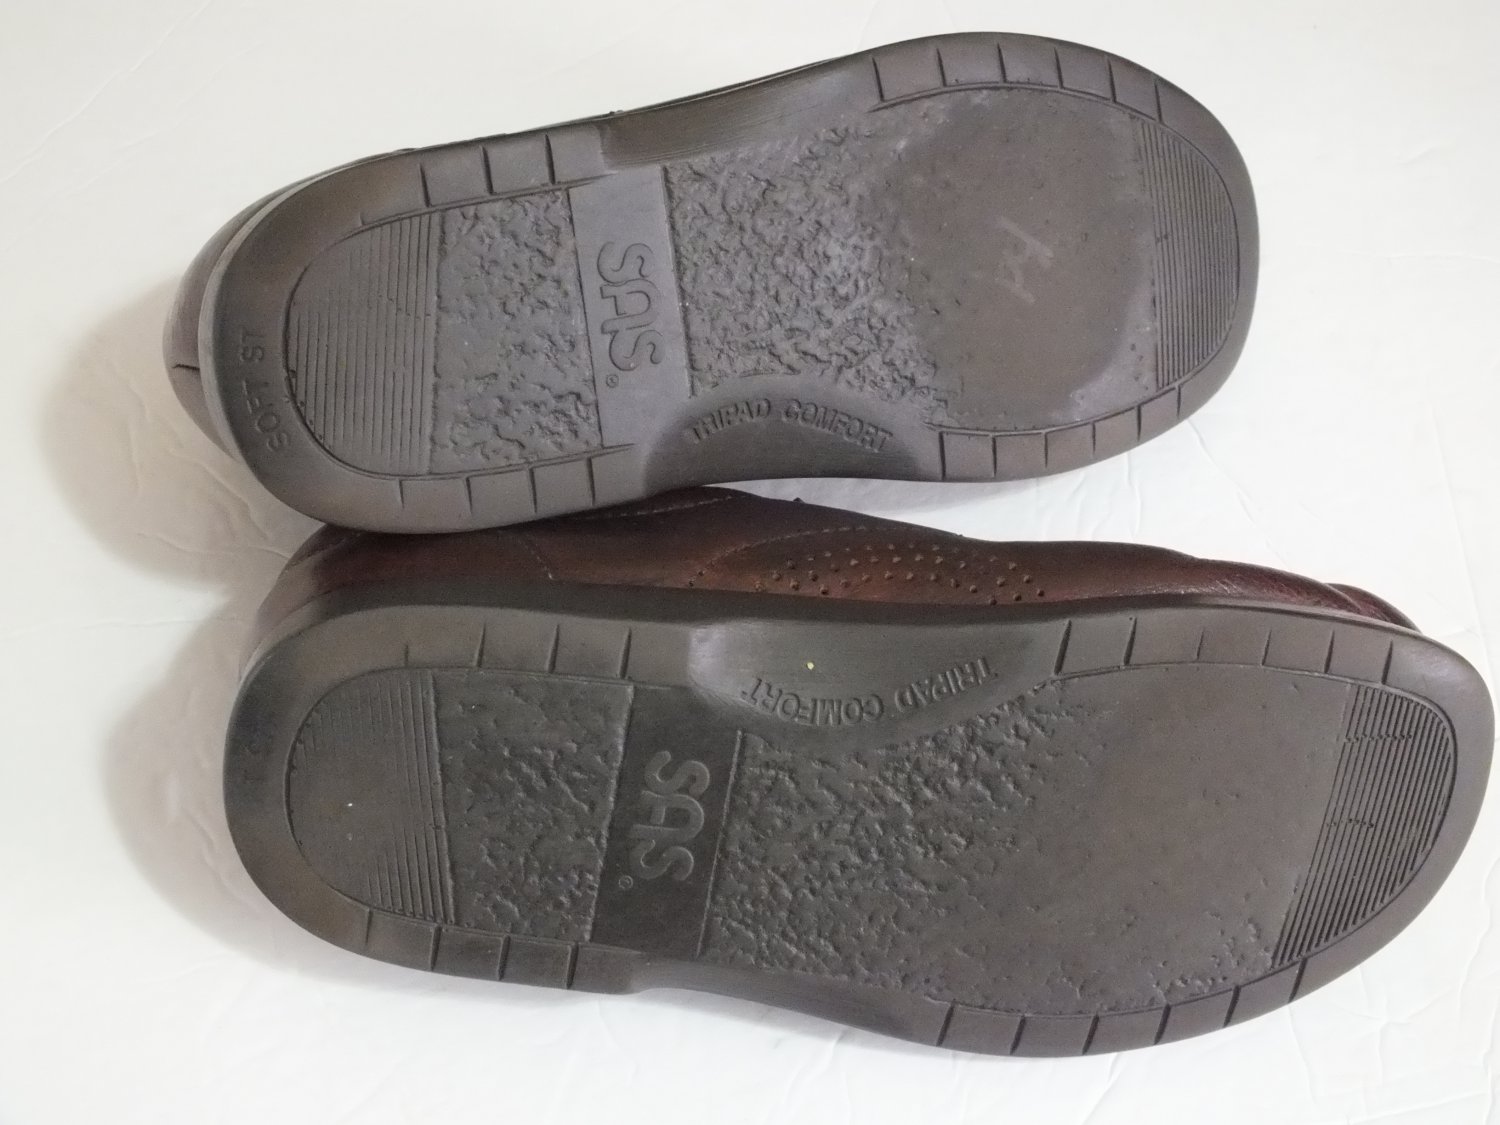 SAS Tripad Comfort soft step oxford men size 11.5 M brown leather